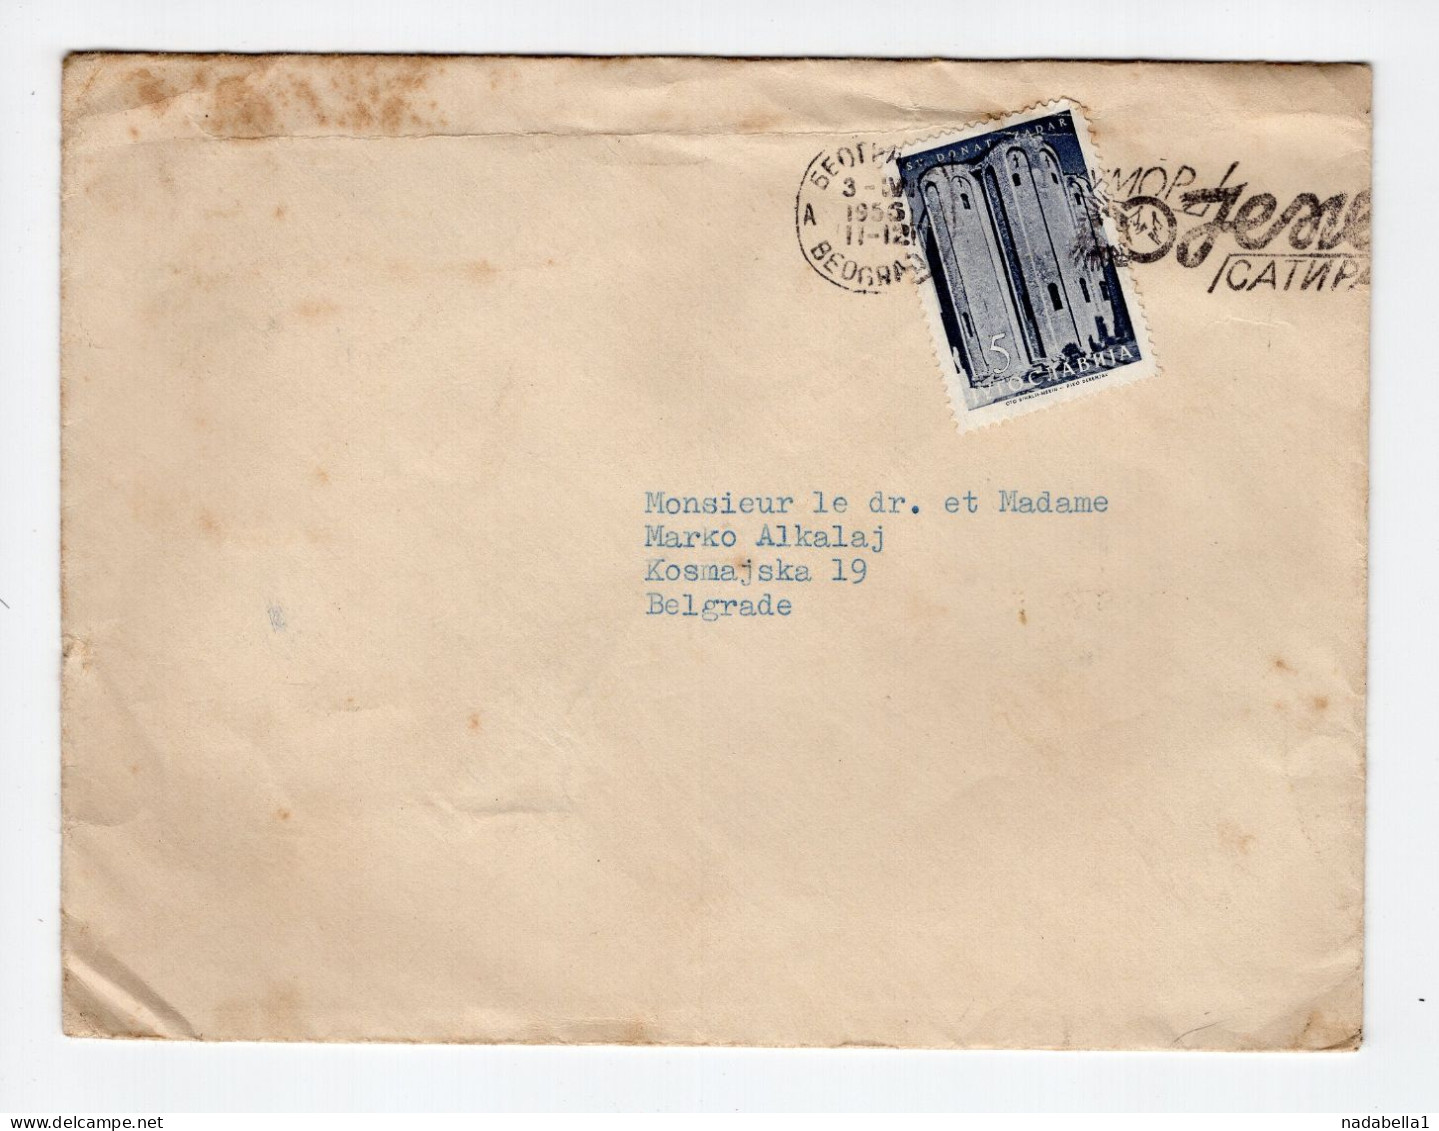 1956. YUGOSLAVIA,SERBIA,JUDAICA,BELGRADE,ISRAEL EMBASSY BELGRADE COVER SENT TO DR. MARKO ALKALI,WATER MARK - Lettres & Documents